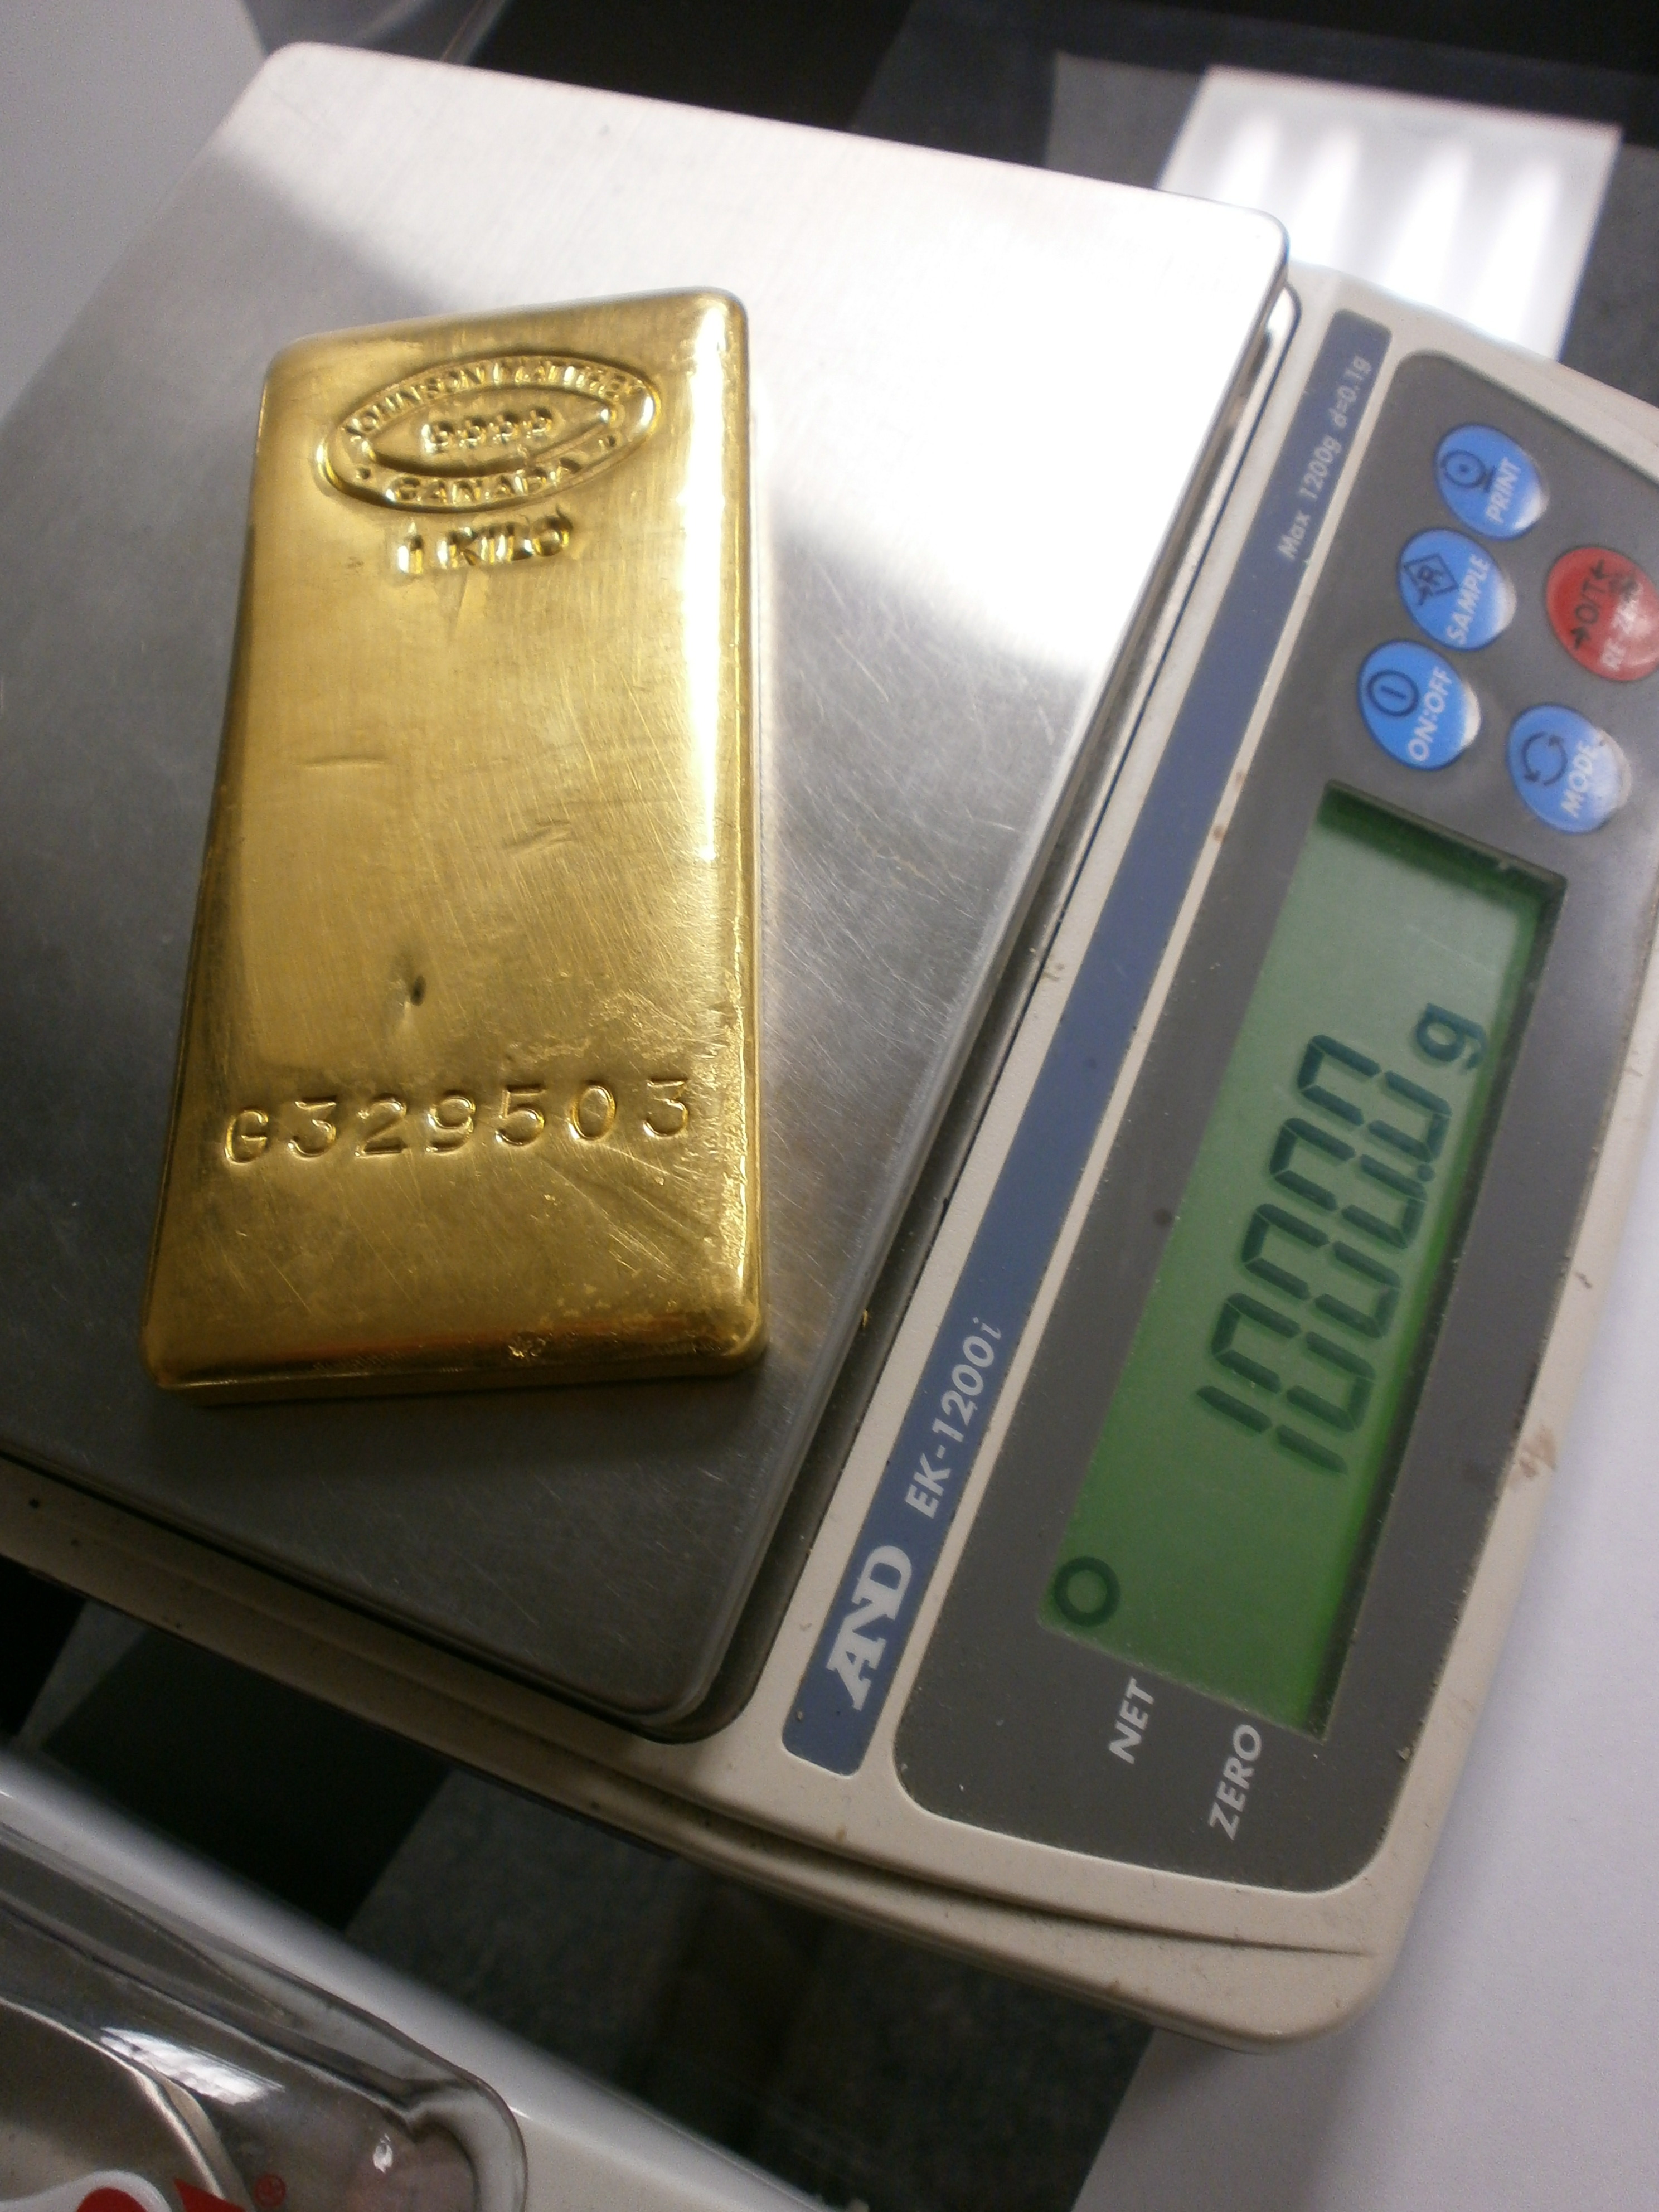 1 слиток золота весит